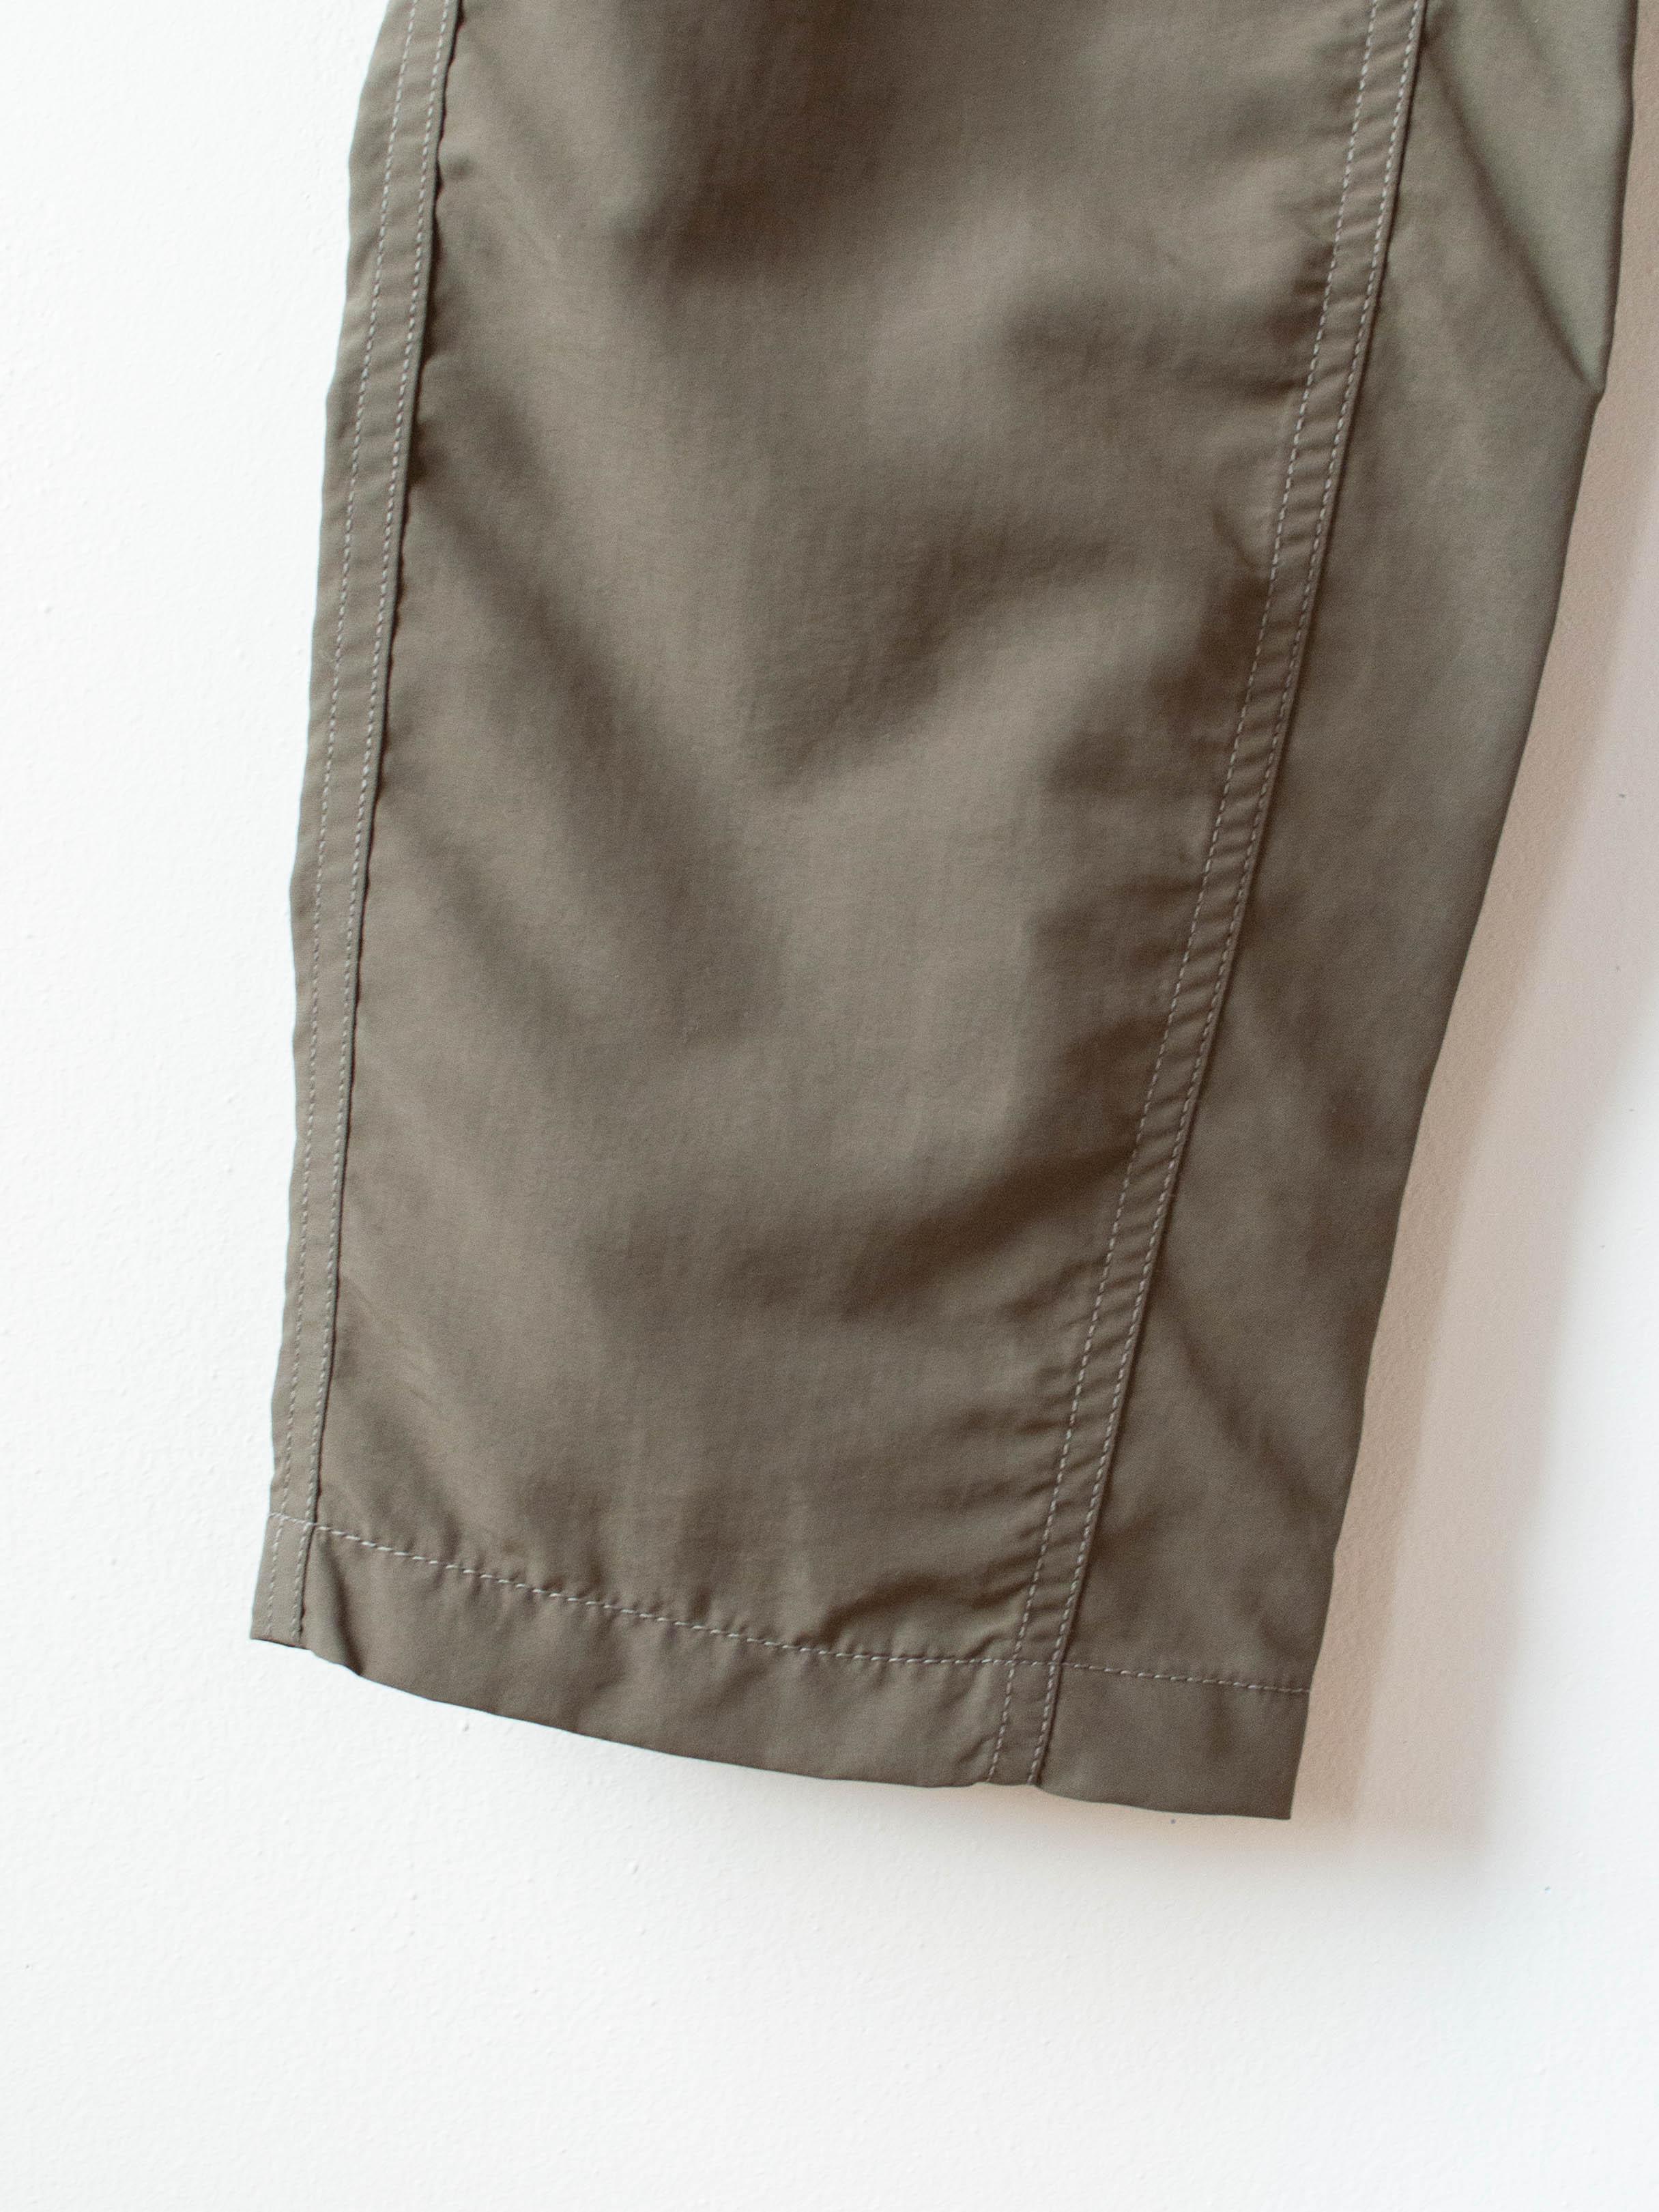 Namu Shop - CAYL Supplex Cargo Pants - Khaki